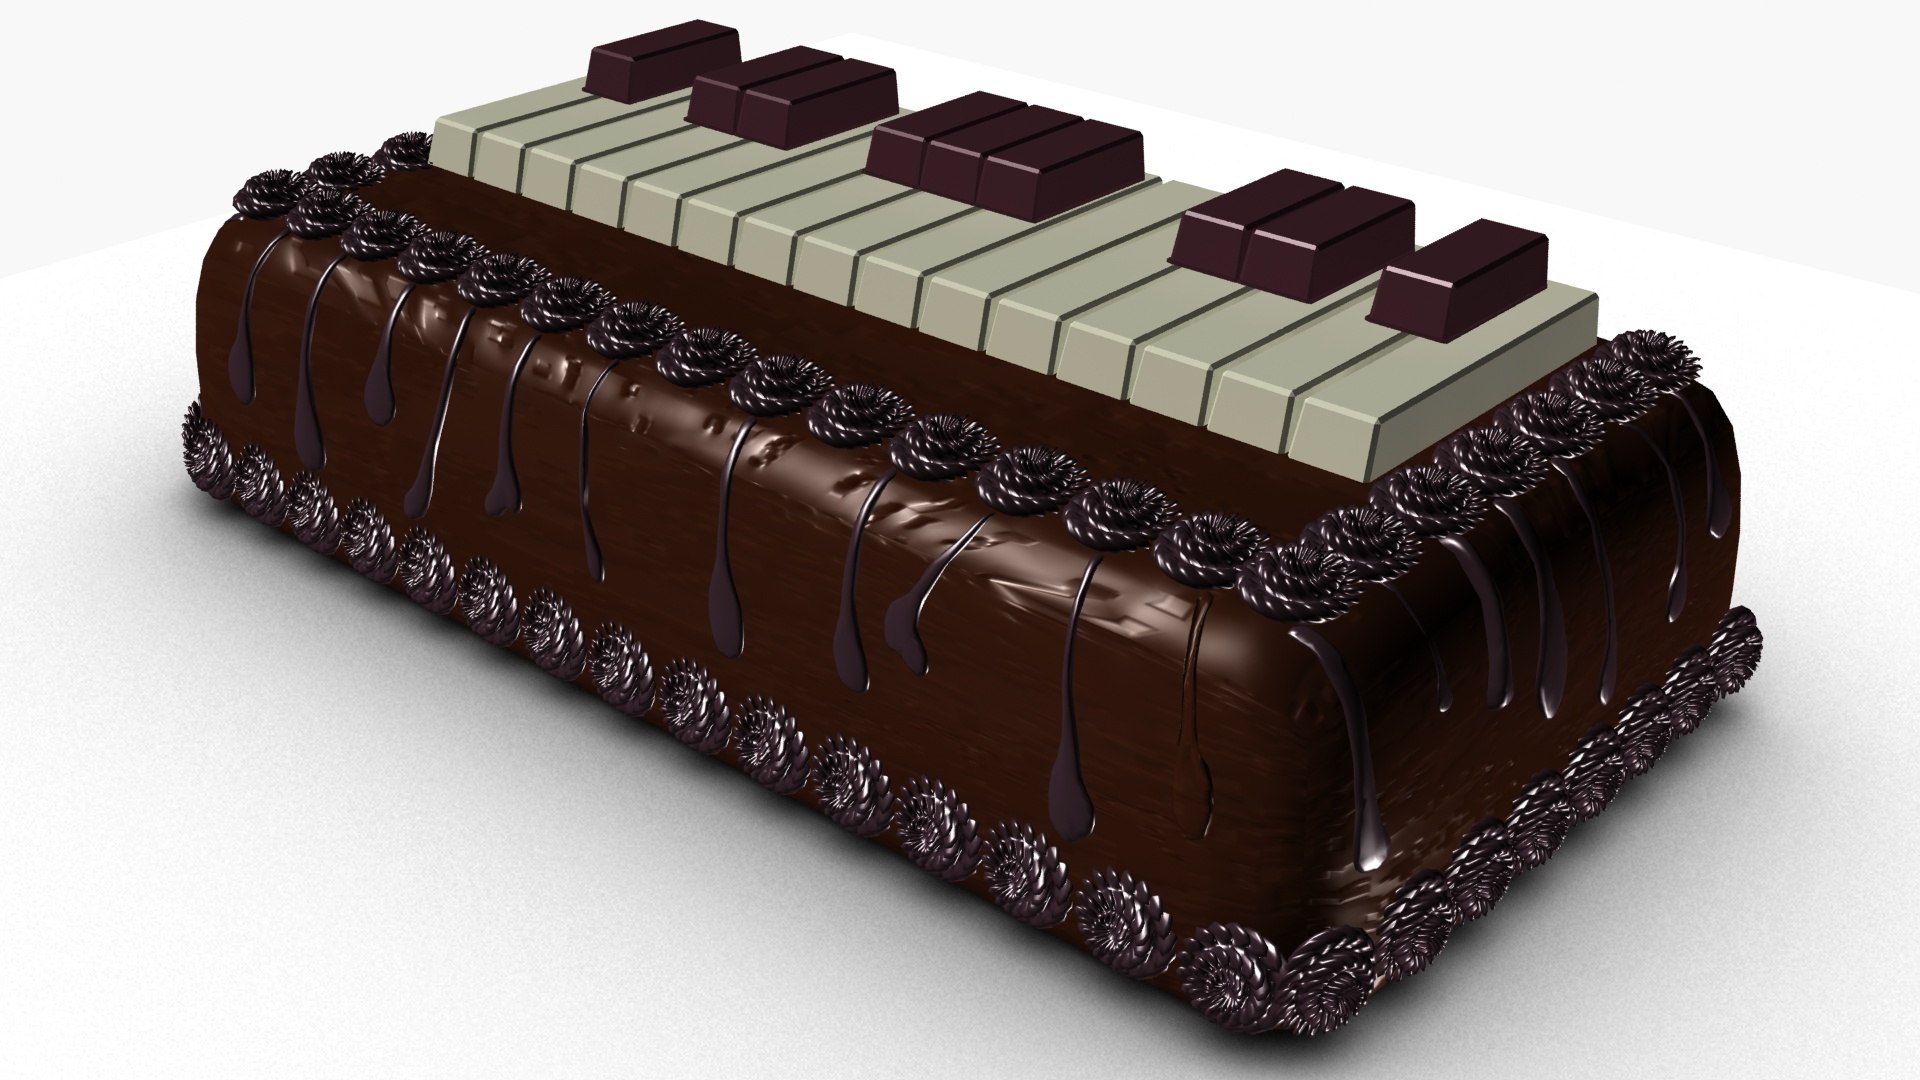 Musical Theme Birthday Cake